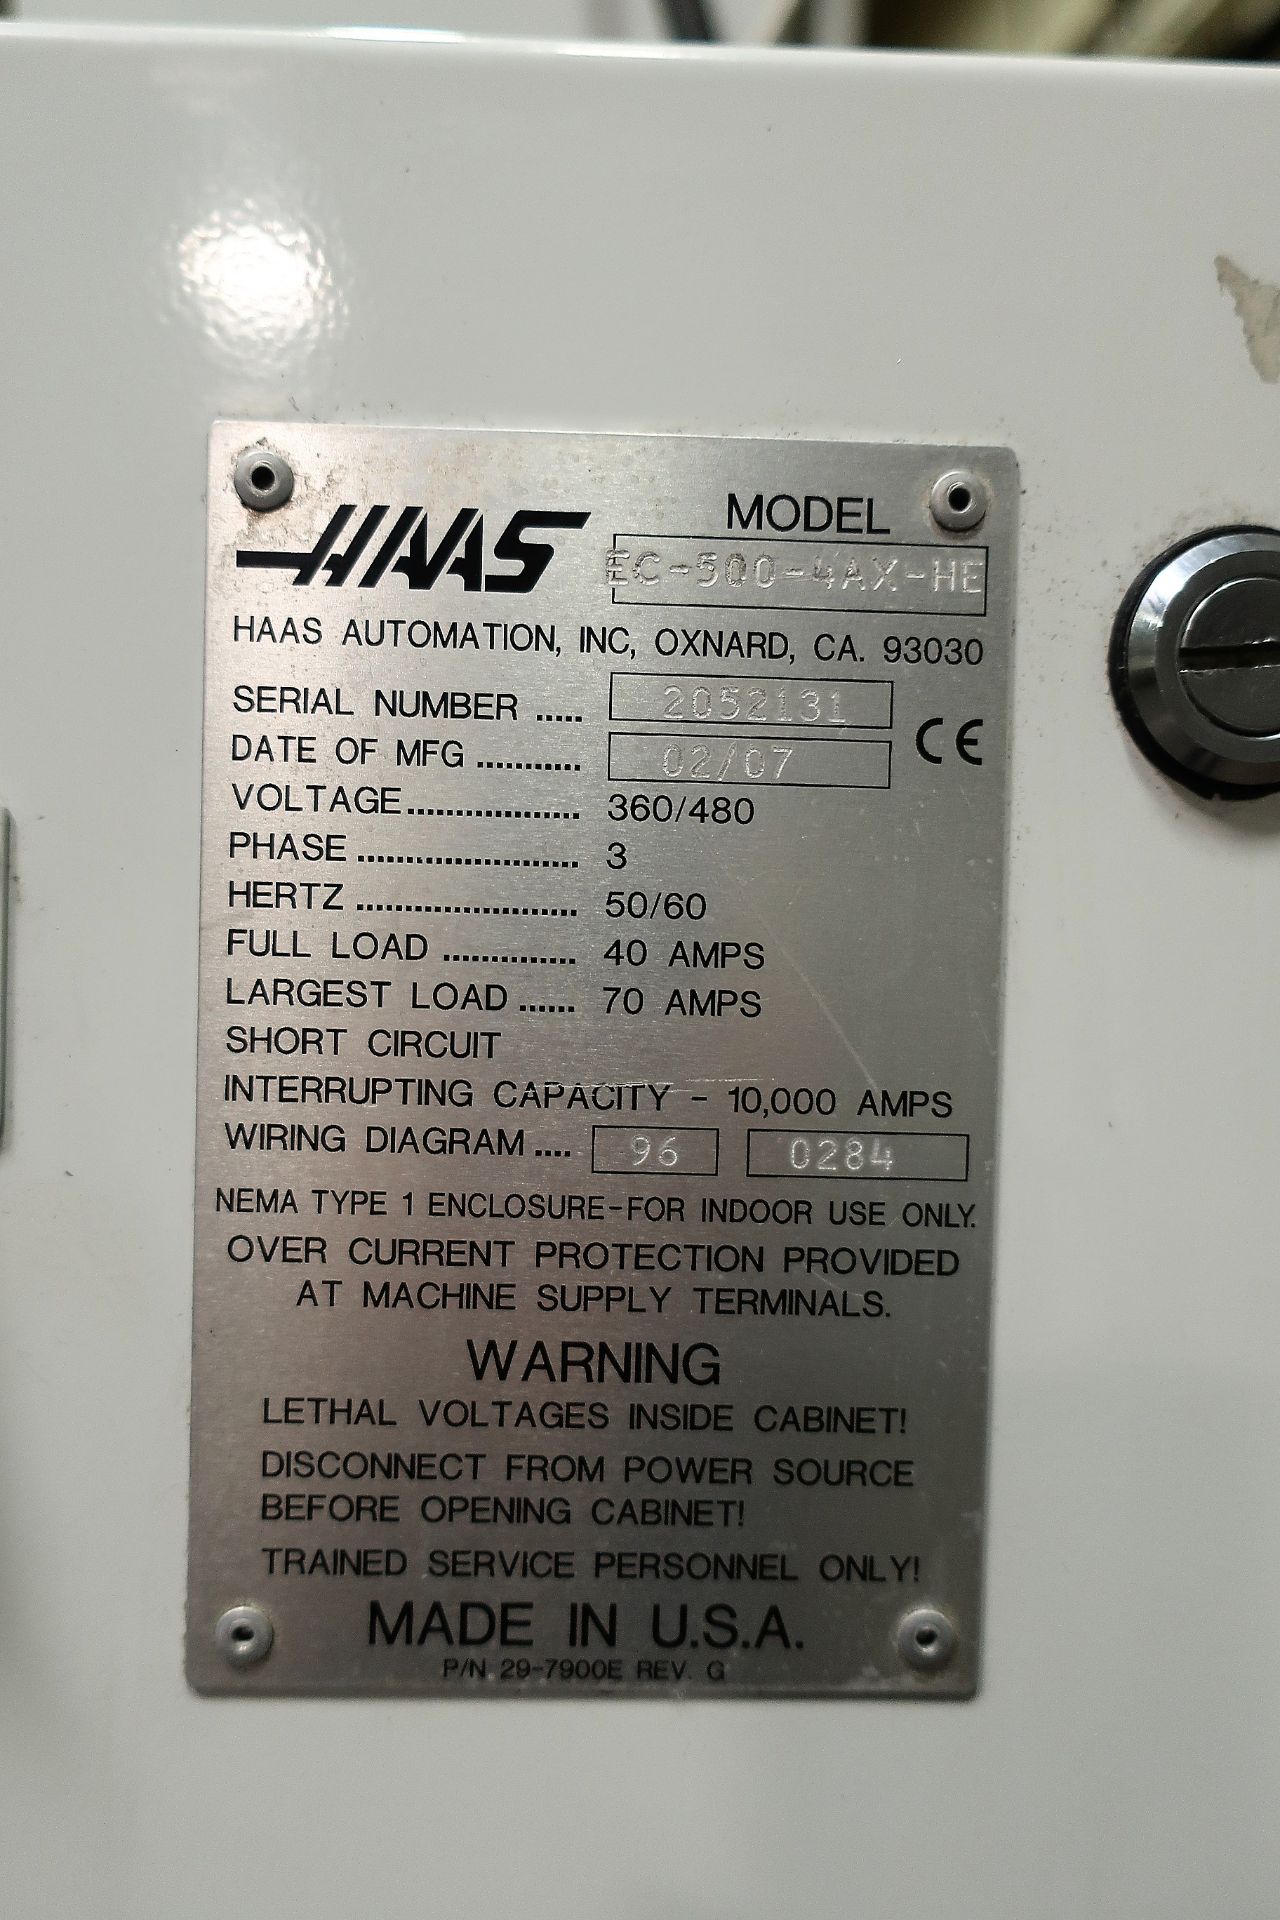 19.7"X19.7" HAAS EC500 4-AXIS CNC HORIZONTAL MACHINING CENTER, S/N 2052131, 2007 - Image 9 of 11